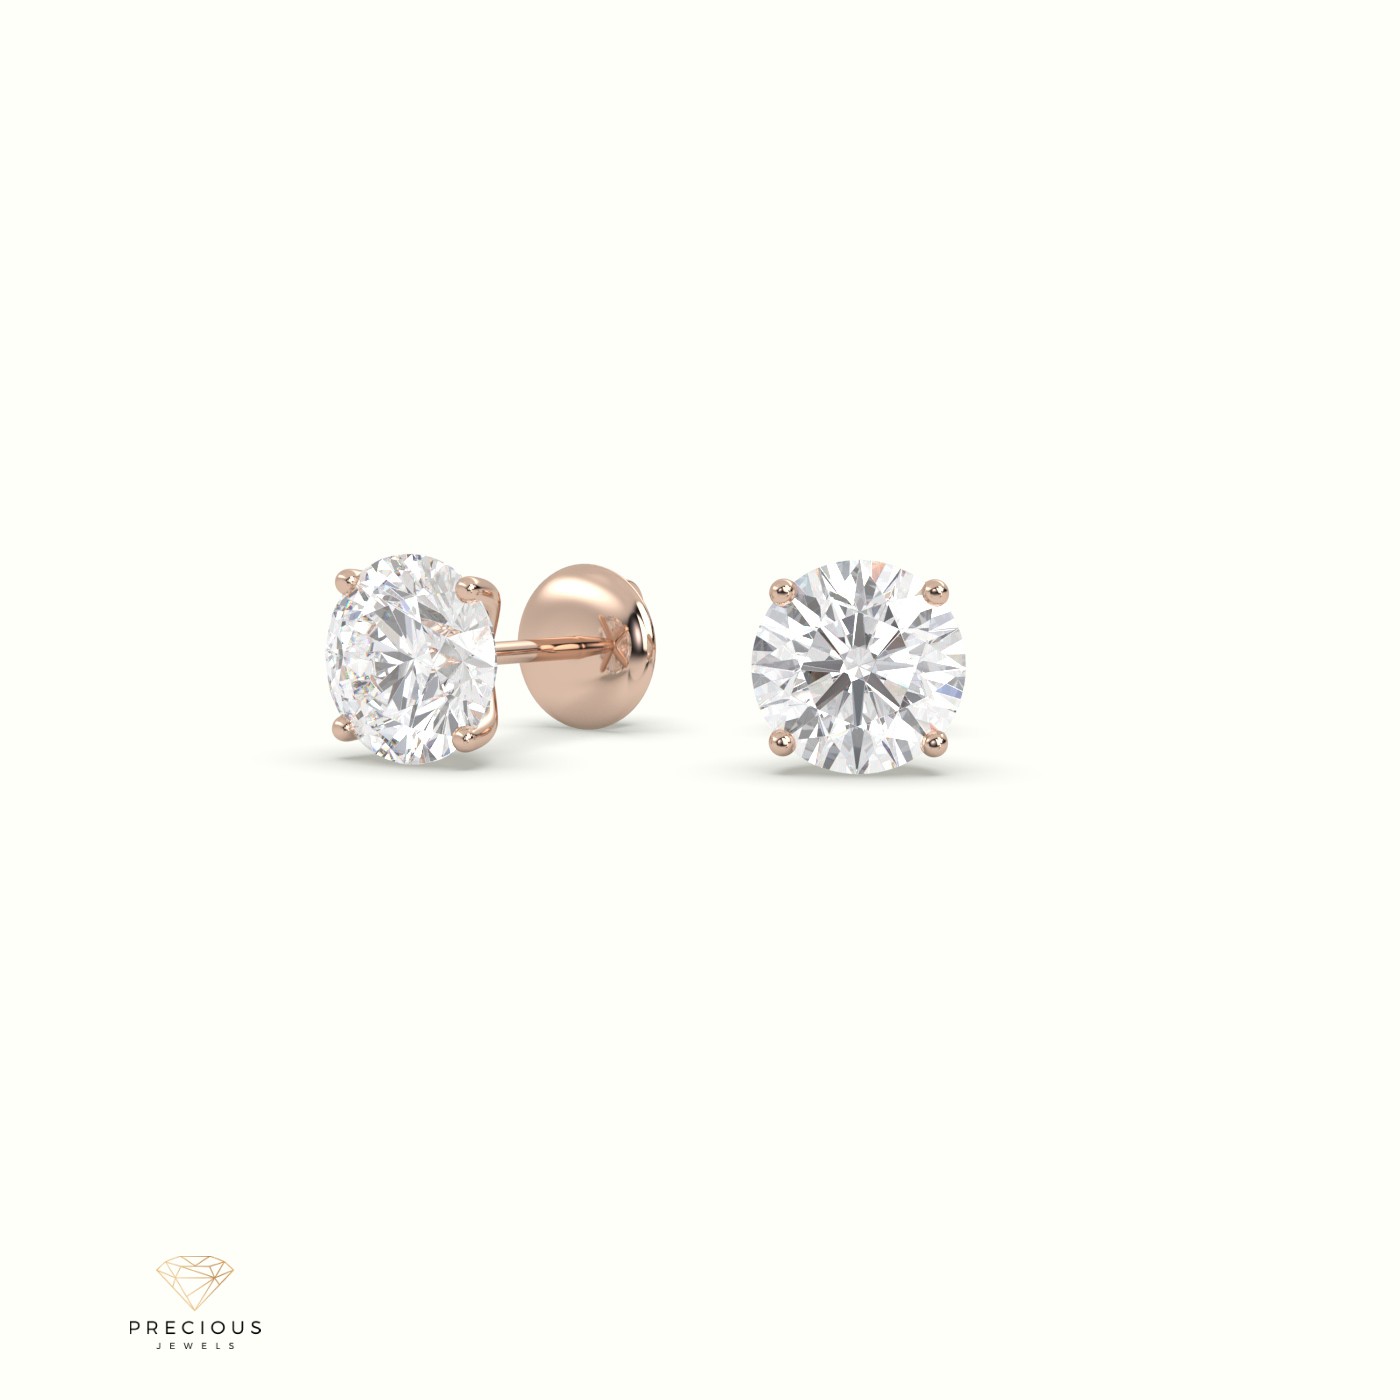 18k rose gold 4 prongs round diamond studs earrings - free setting